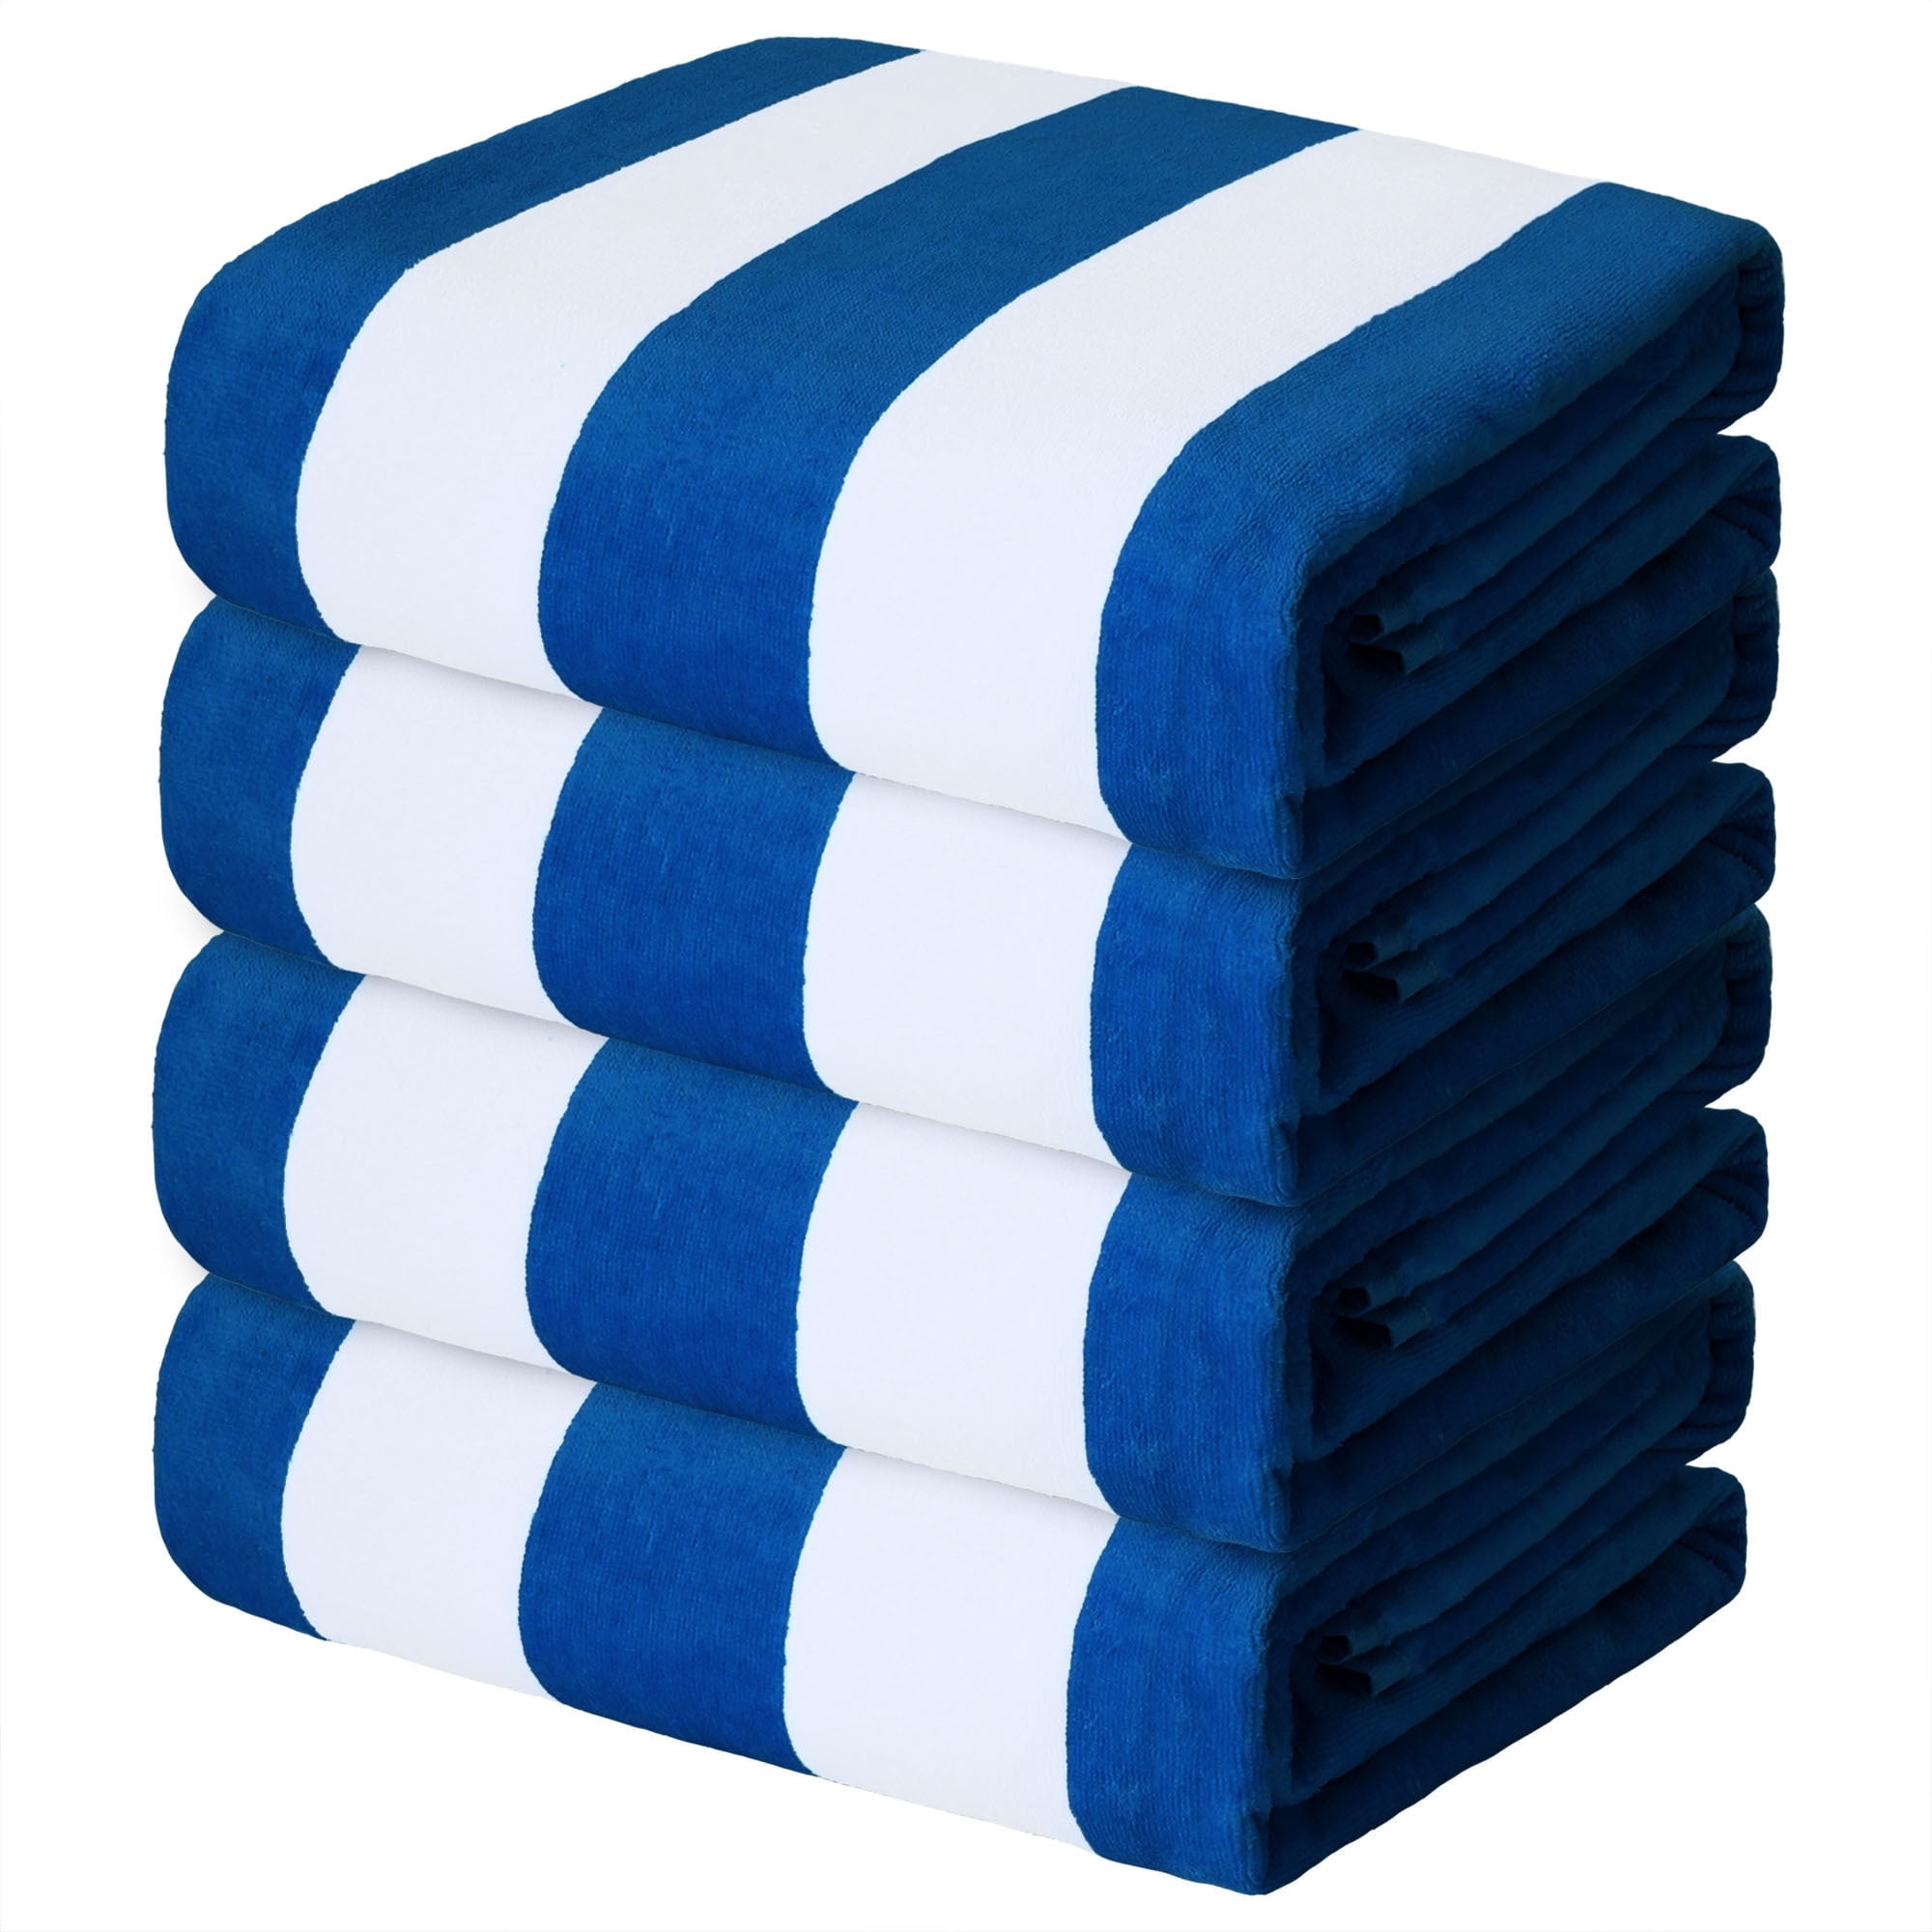 Overfox 100% Cotton Bath Towels Clearance Prime, Towels Beach